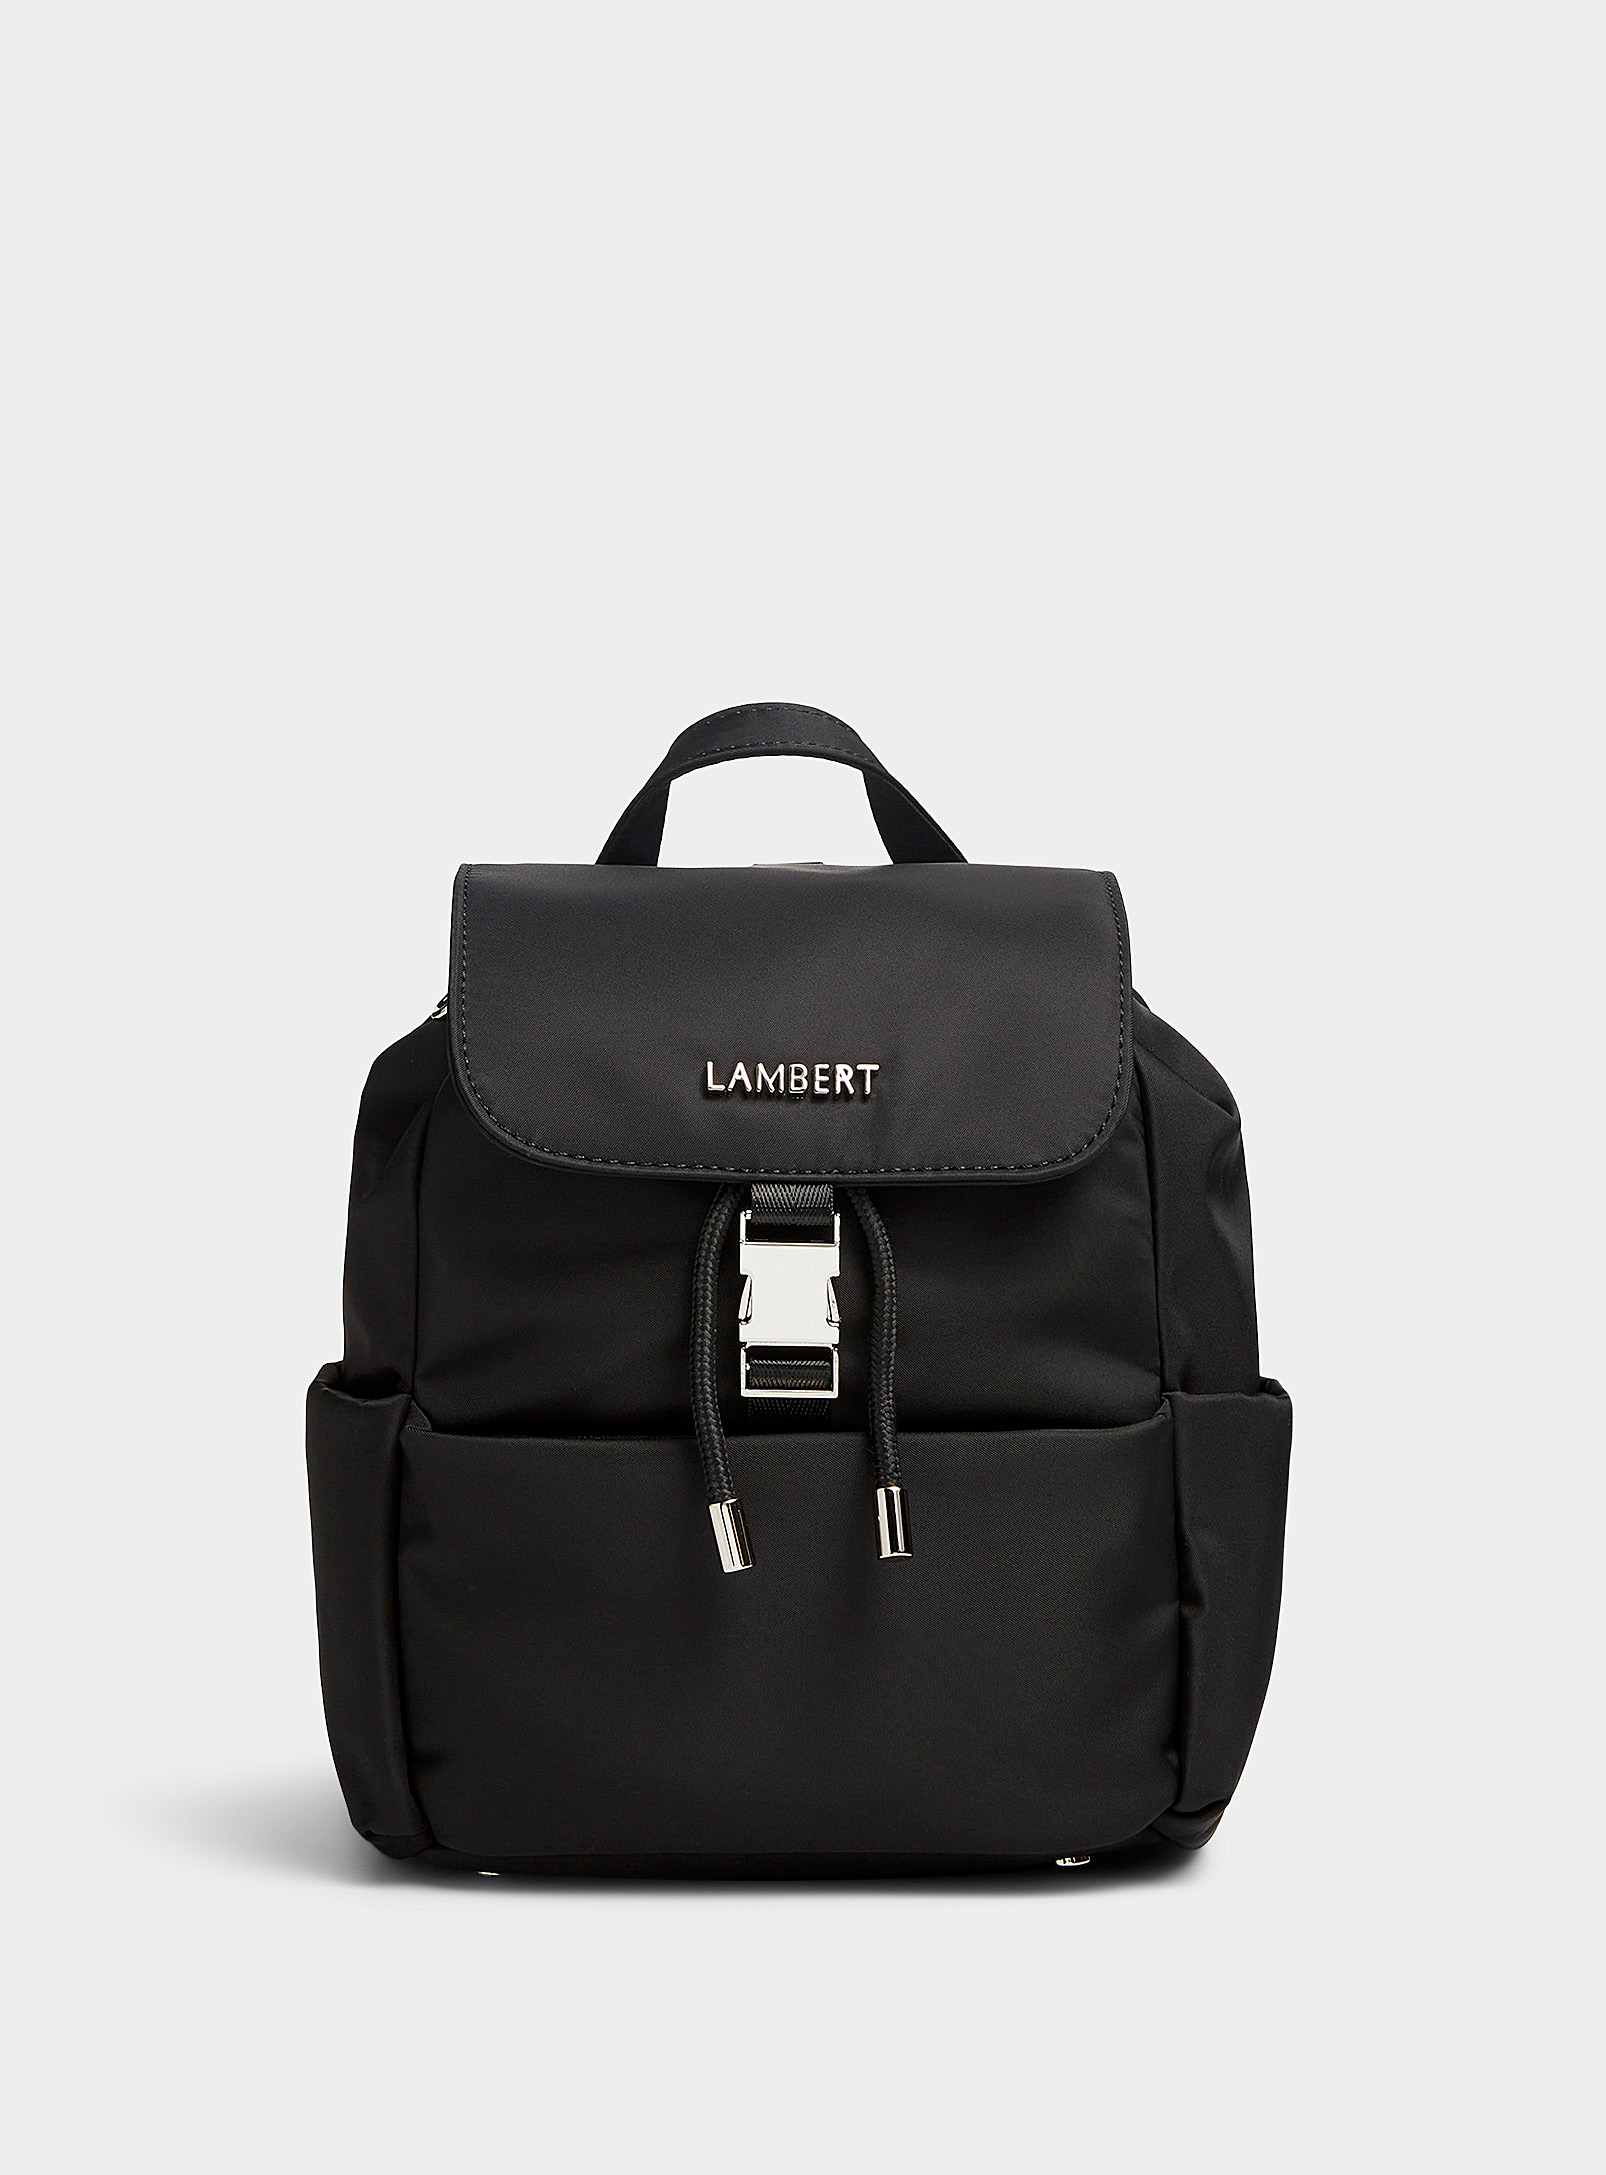 Lambert Aria Small Recycled Nylon Backpack In Black